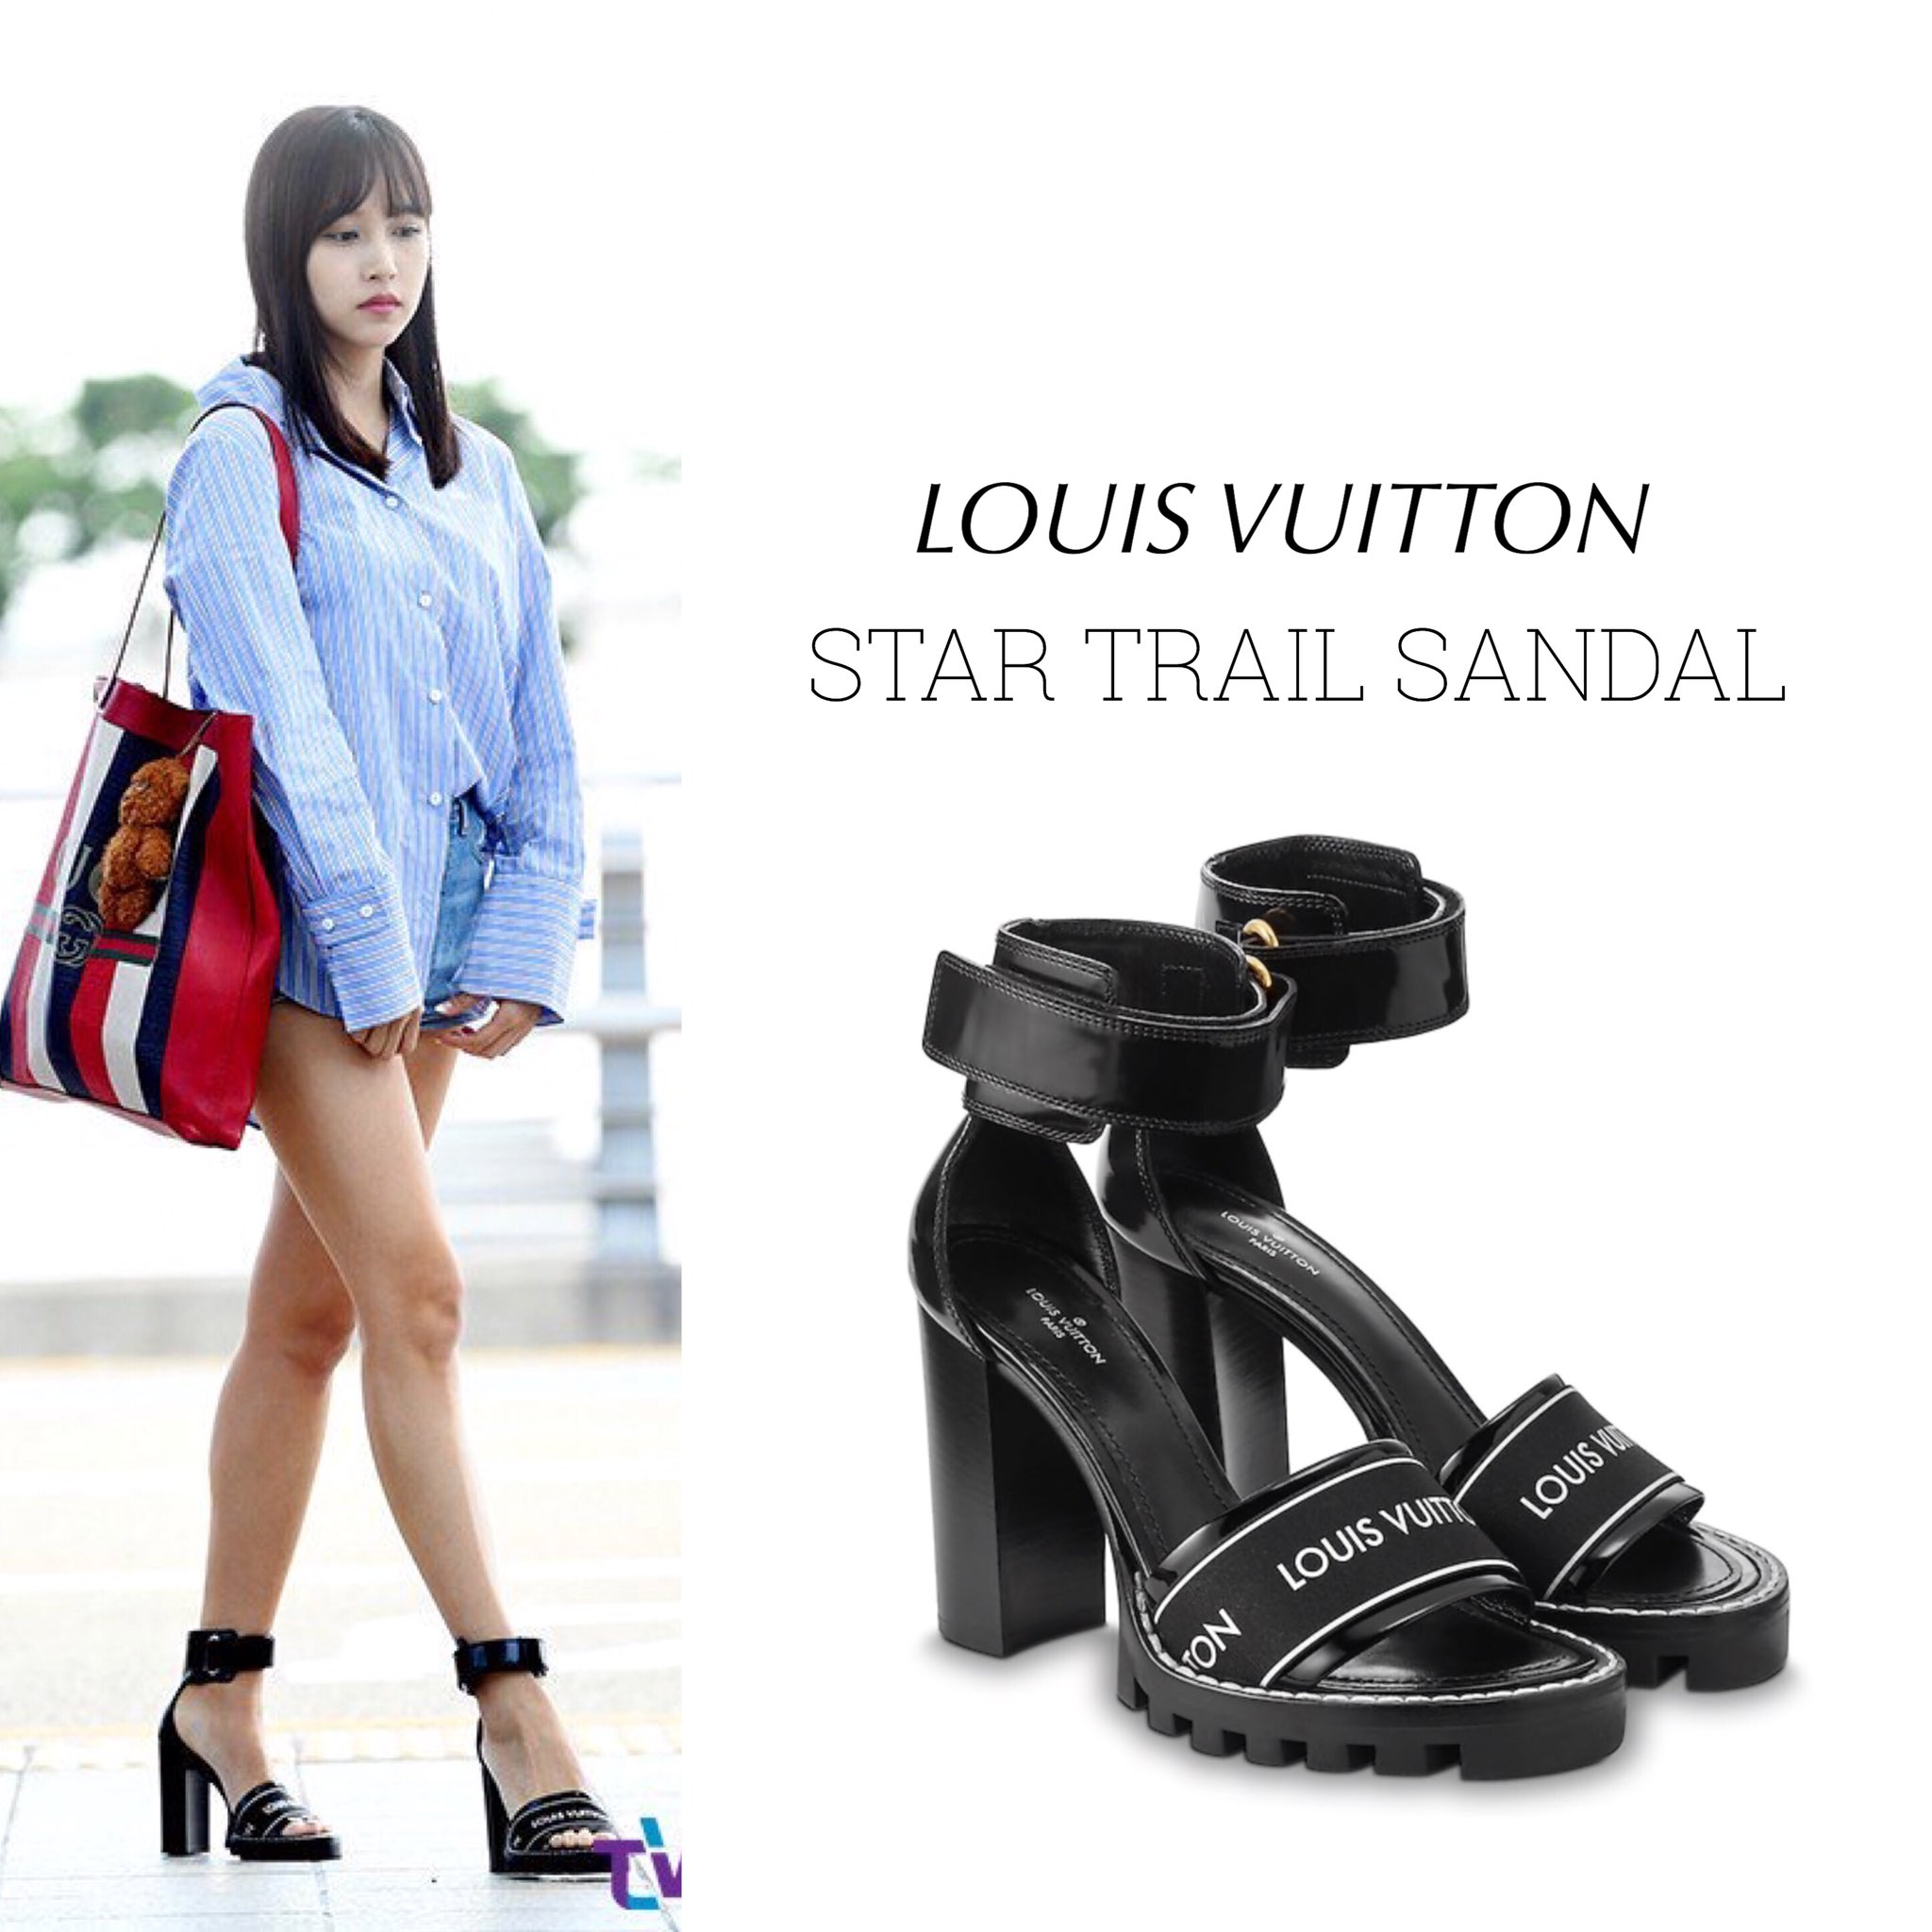 Louis Vuitton Star Trail Sandal